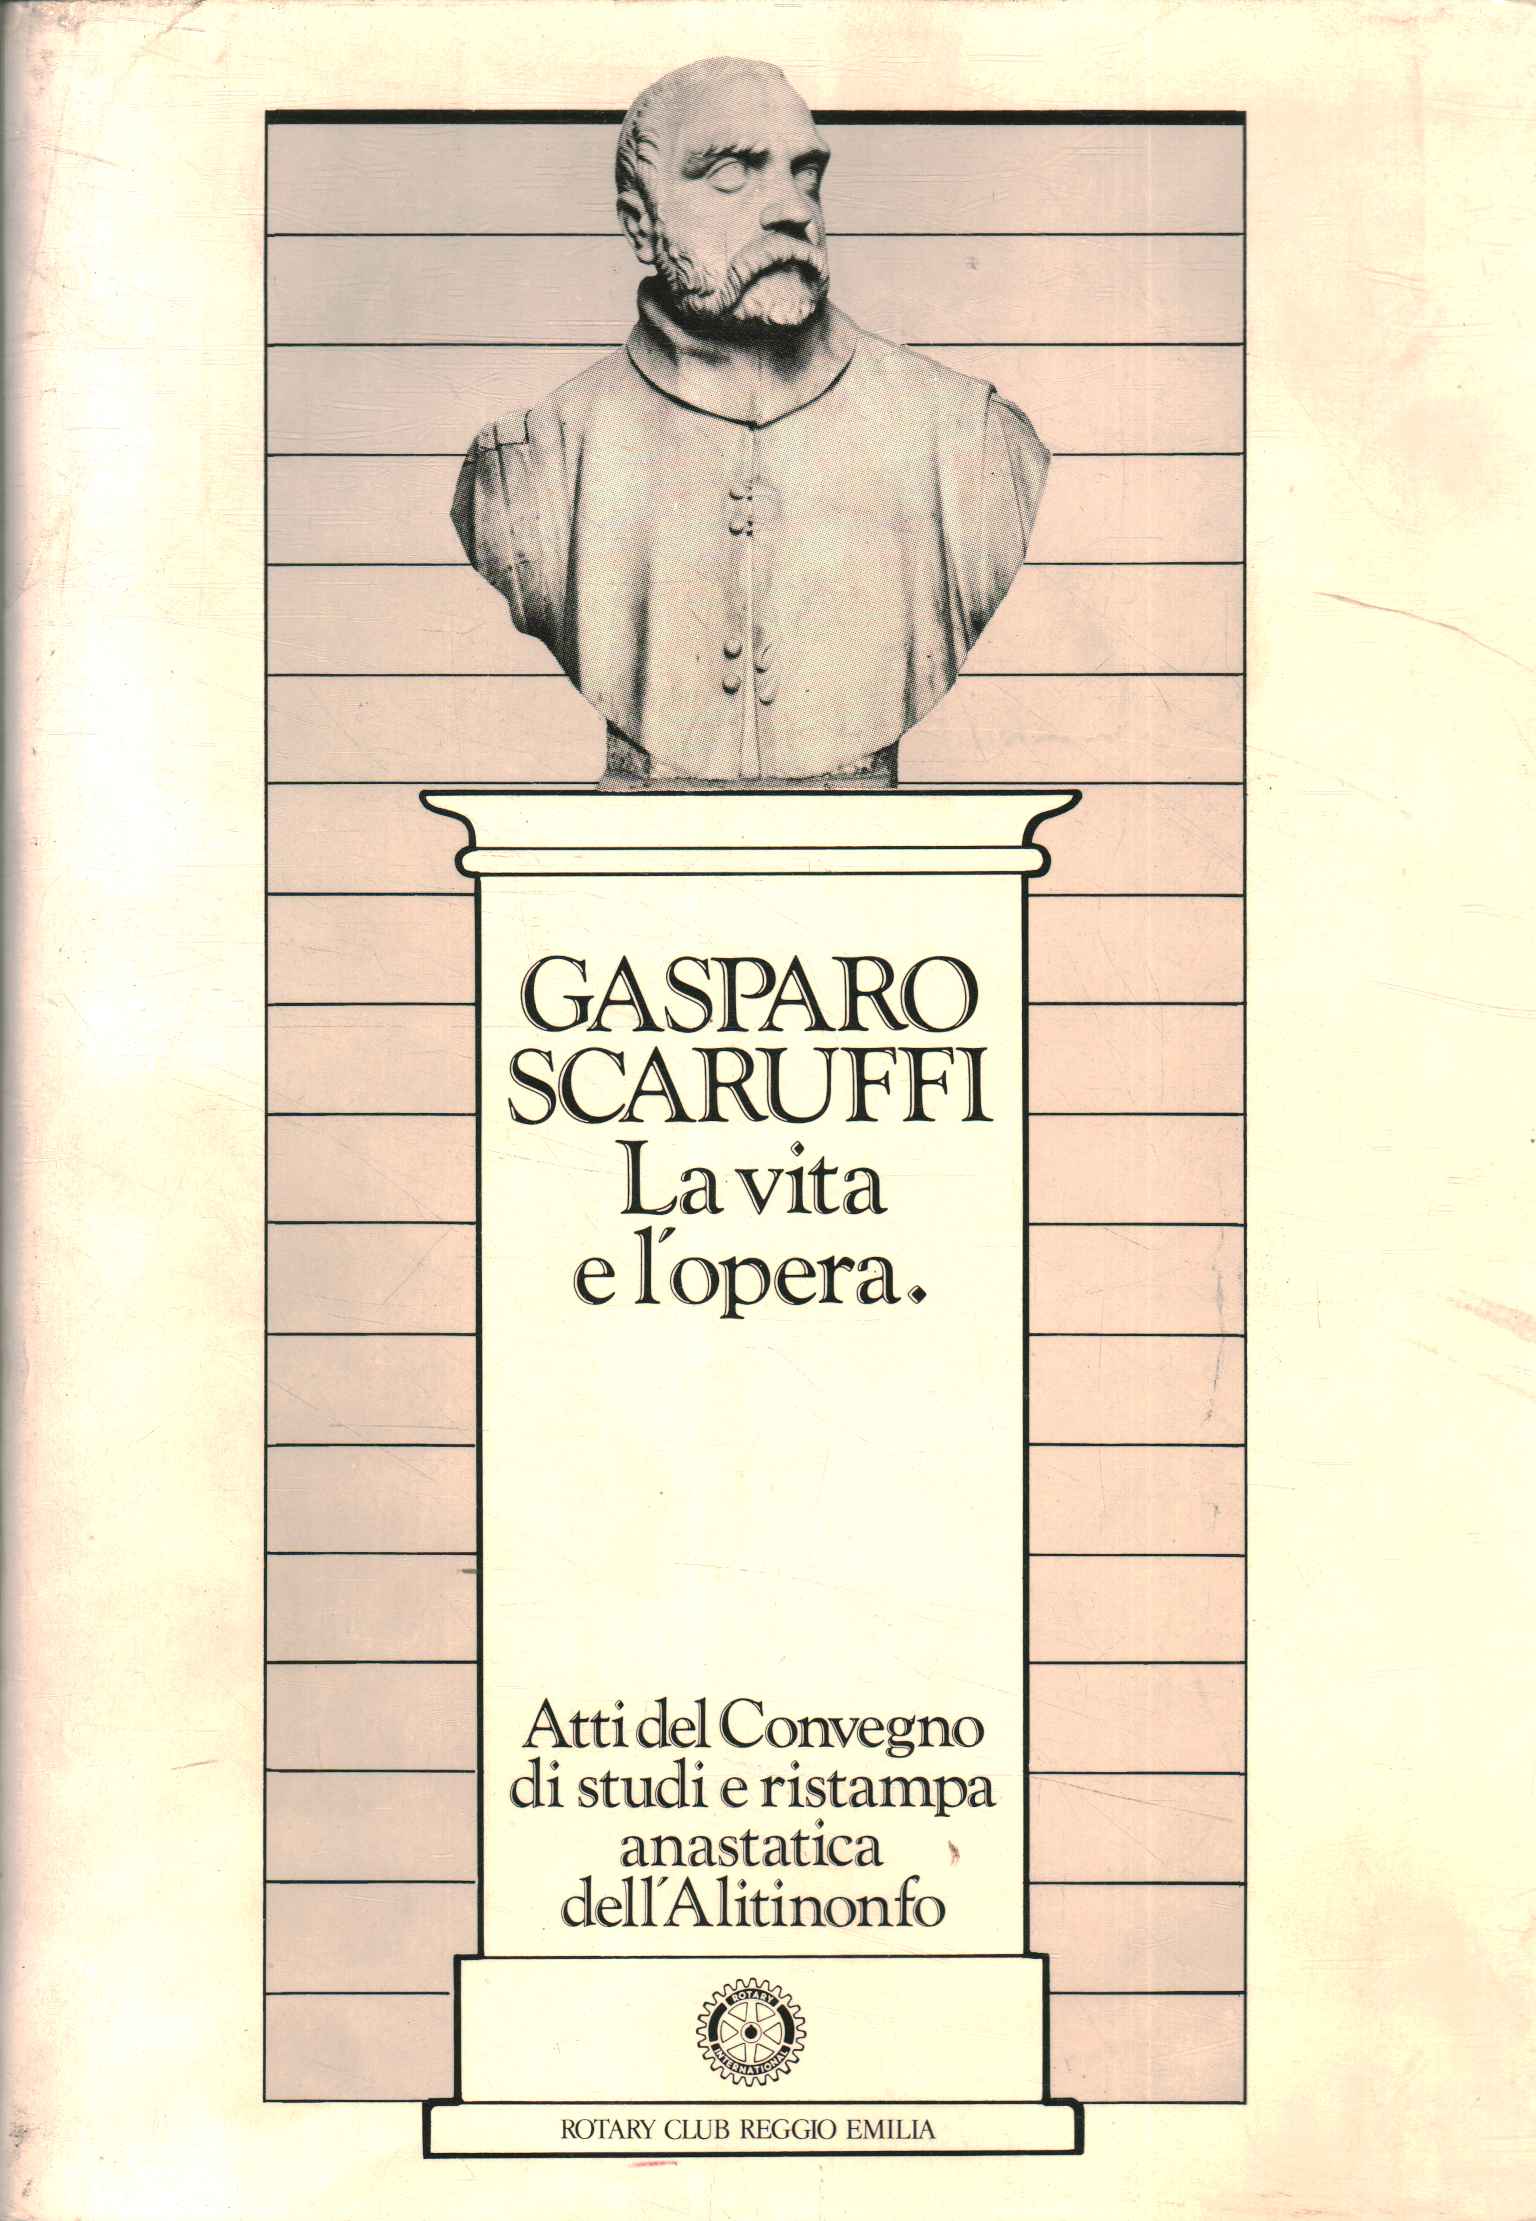 Gasparo Scaruffi. Leben und Apostroph